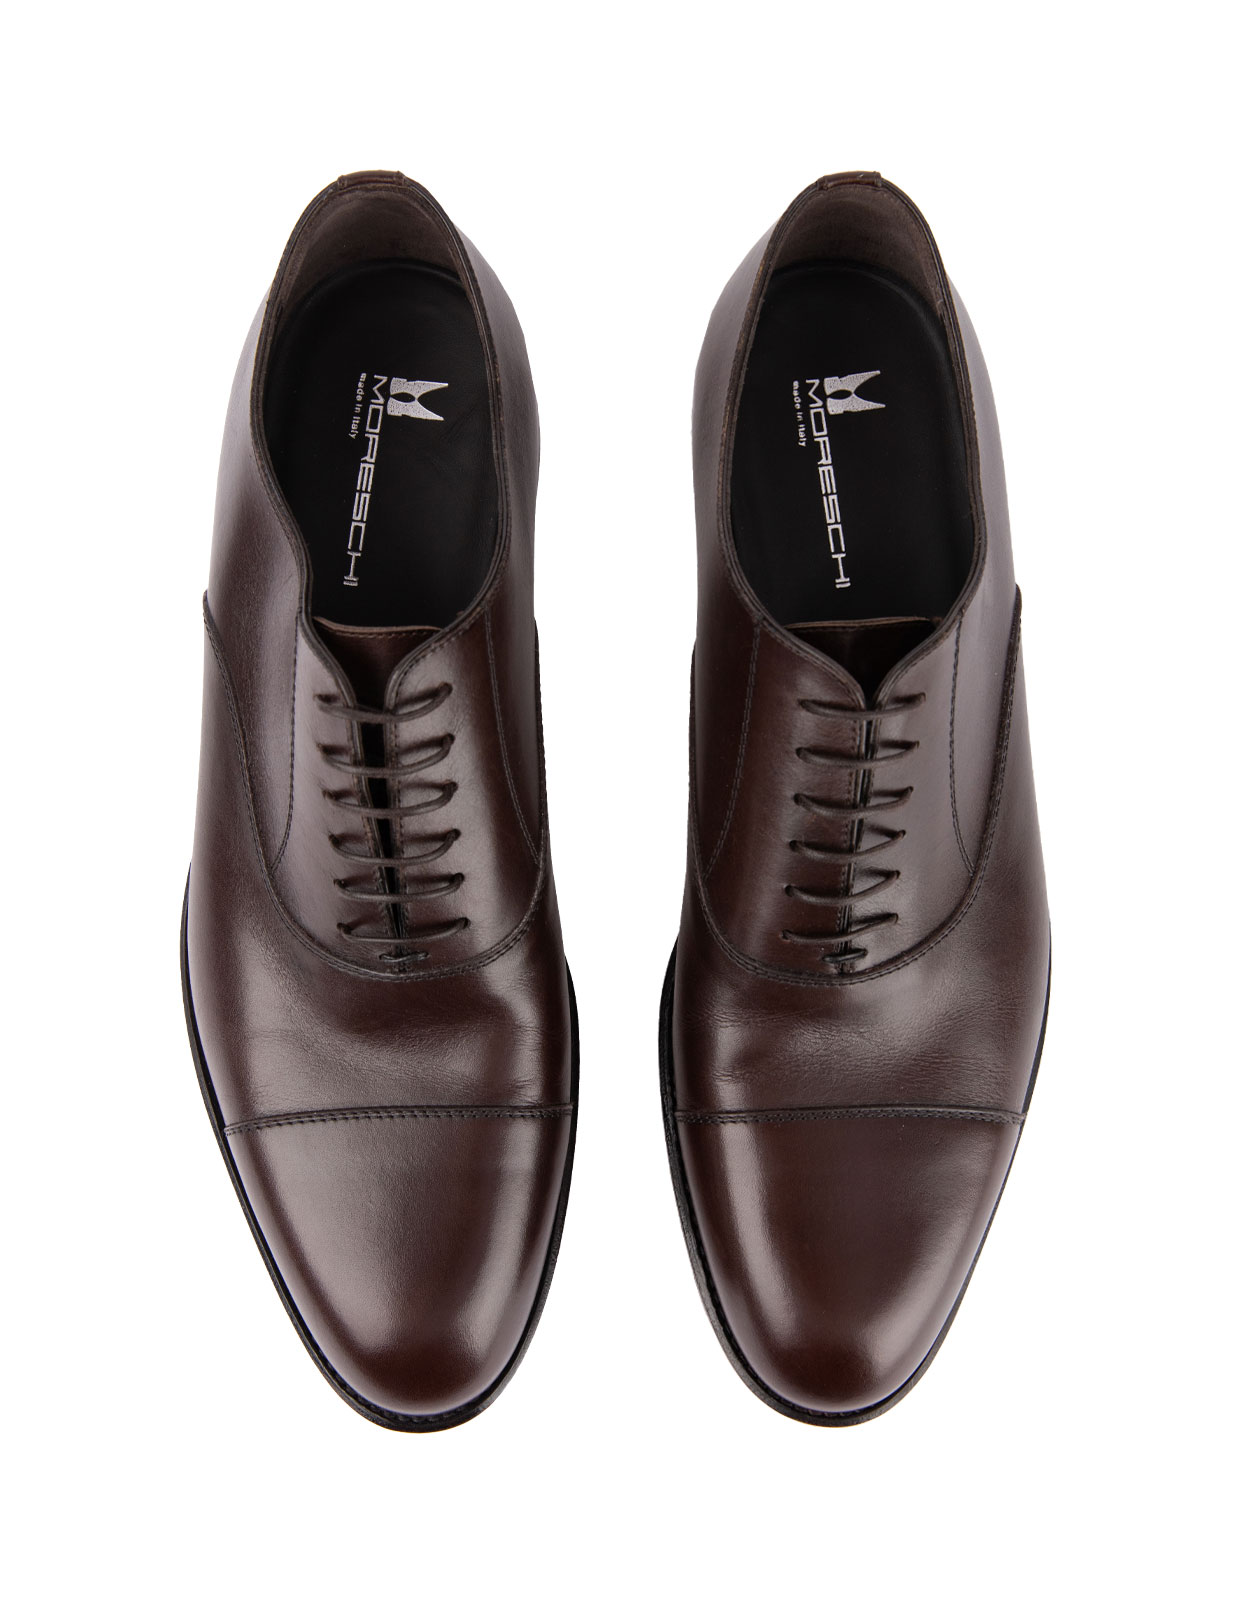 New York Oxford Shoes Calfskin Brown Stl 6